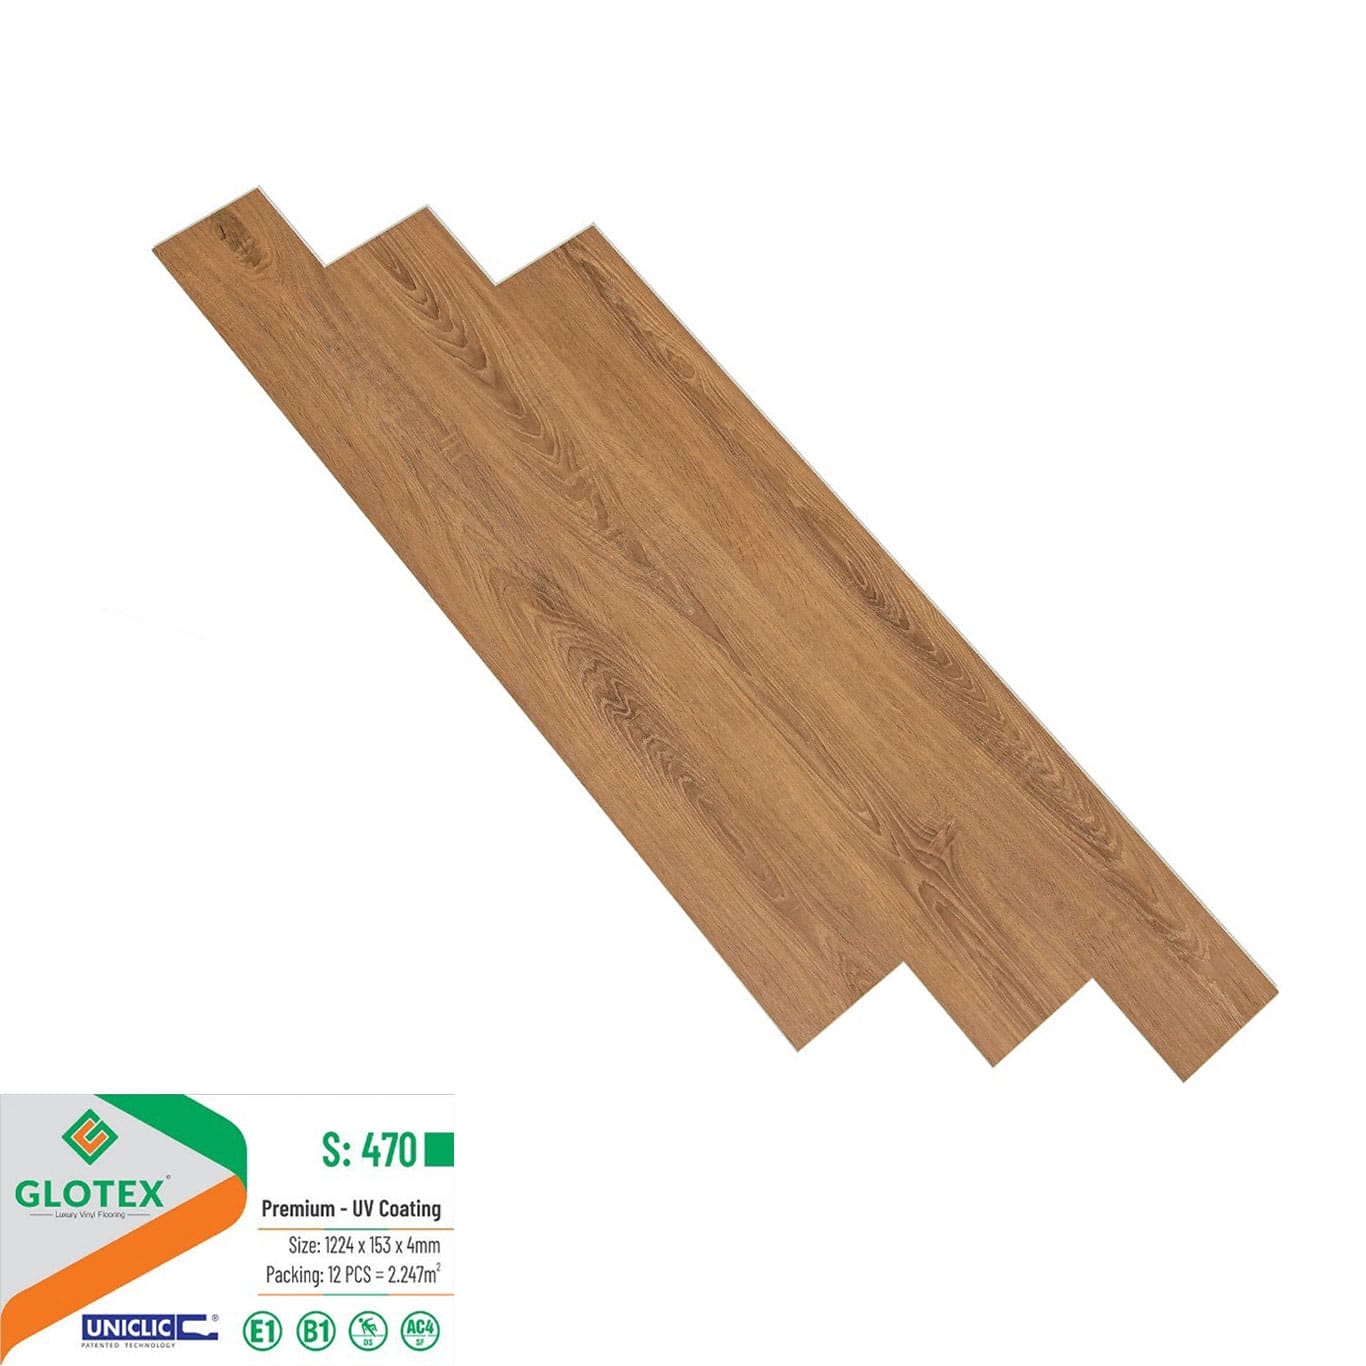 Sàn nhựa giả gỗ Glotex S470